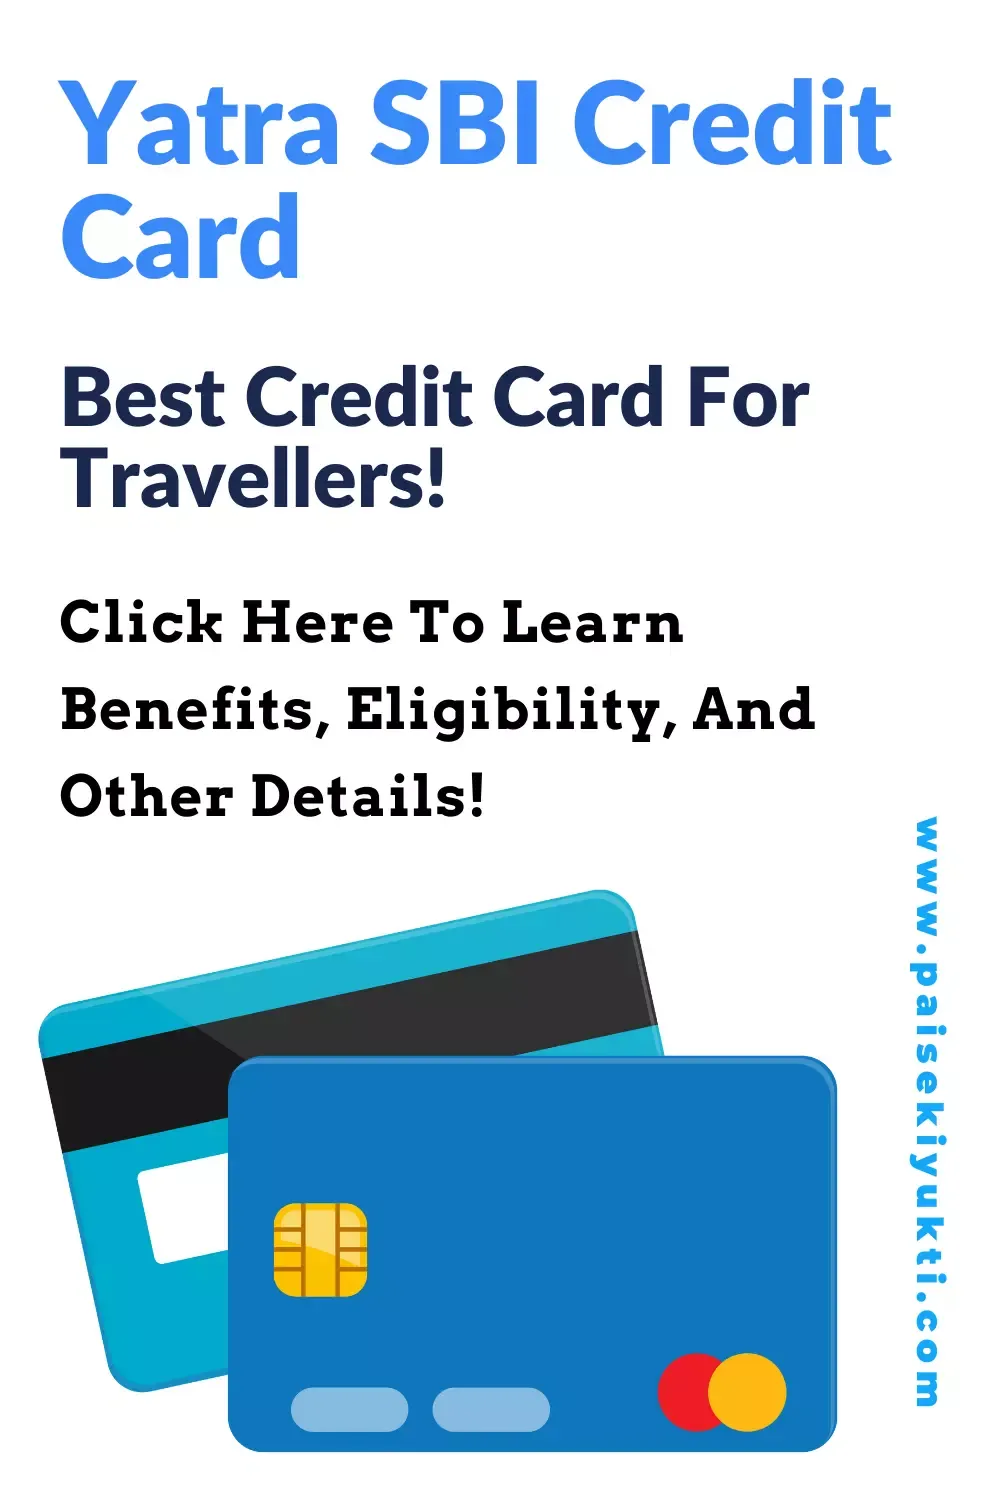 Yatra SBI Credit Card Benefits, Limitations, & Eligibility!